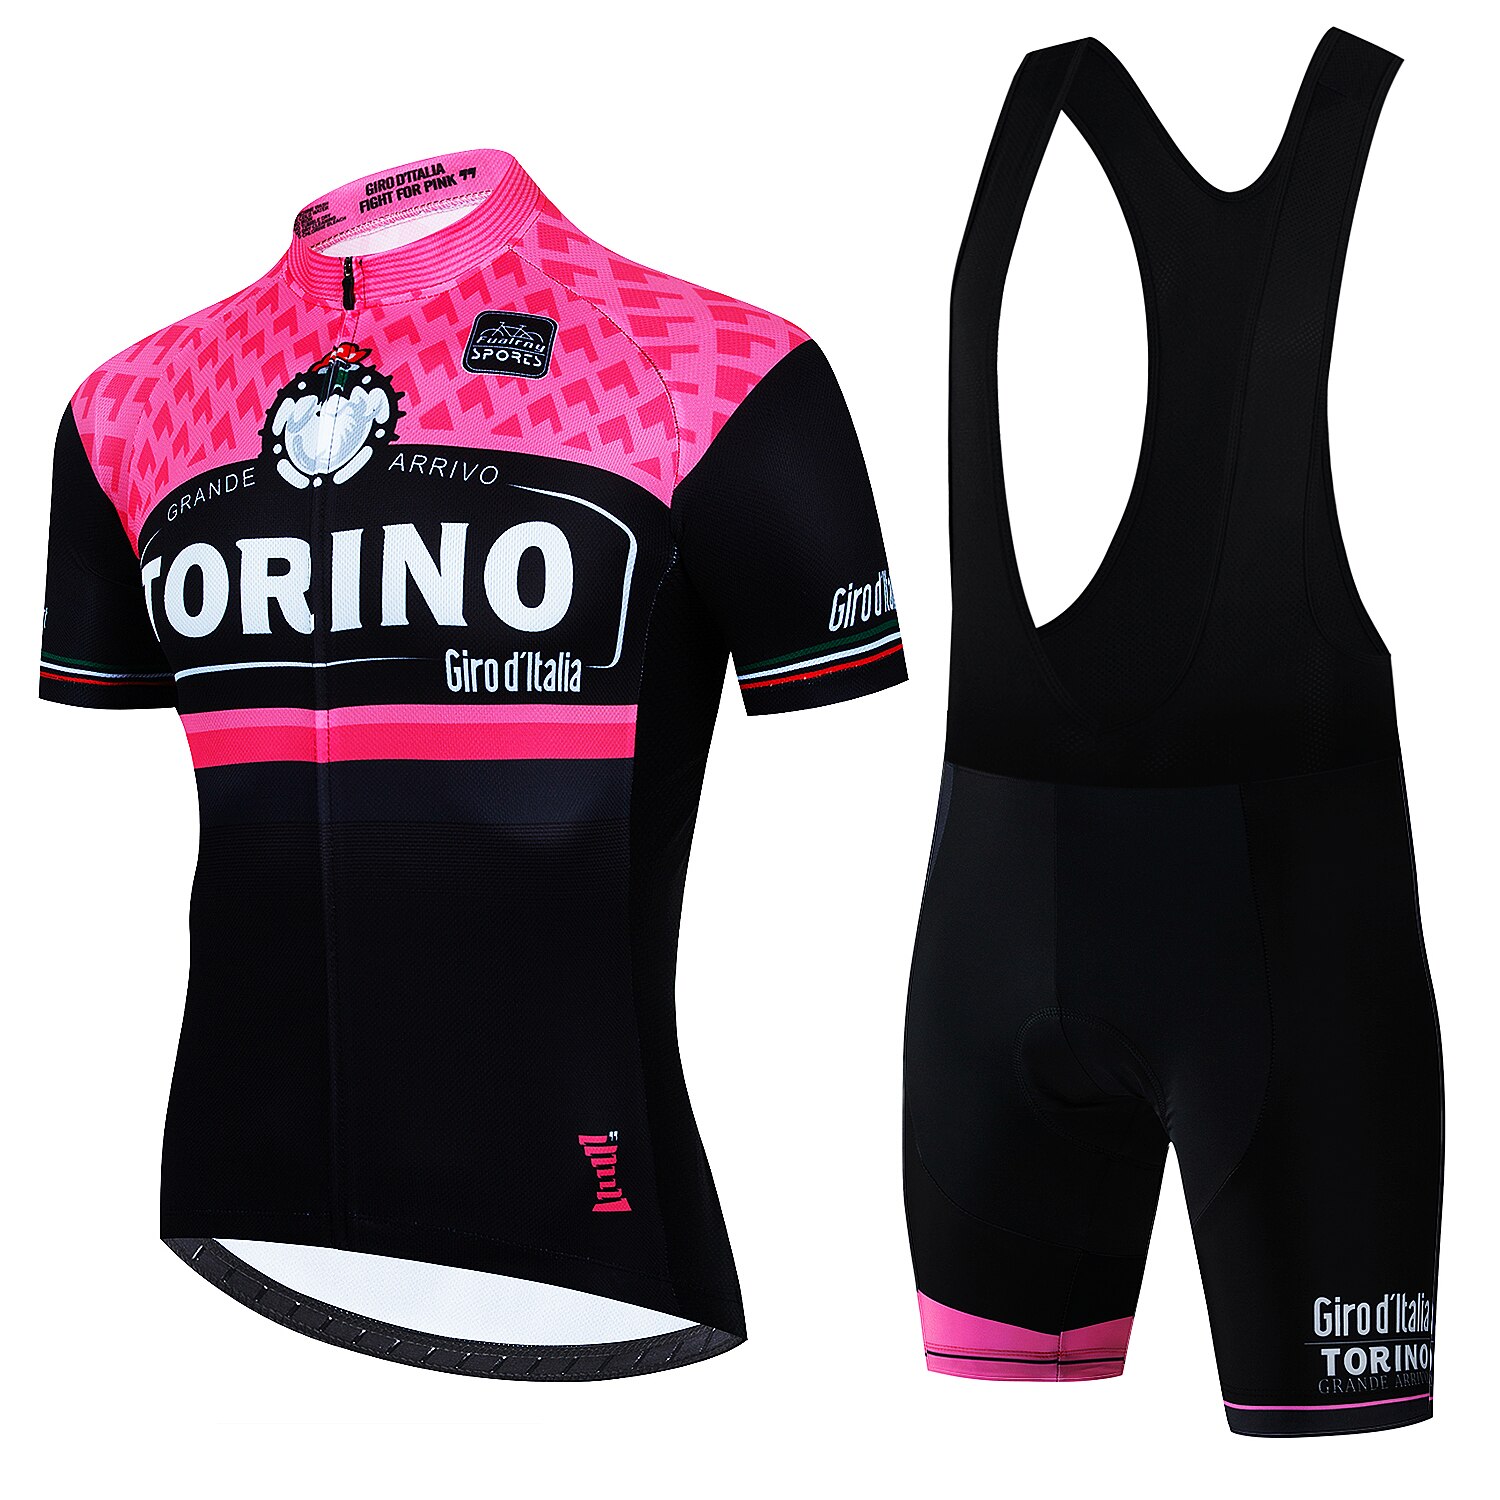 Giro d &italia Pro 여름 사이클링 저지 세트 반팔 통기성 Mtb 자전거 사이클링 의류, Maillot Ropa Ciclismo Uniform Suit